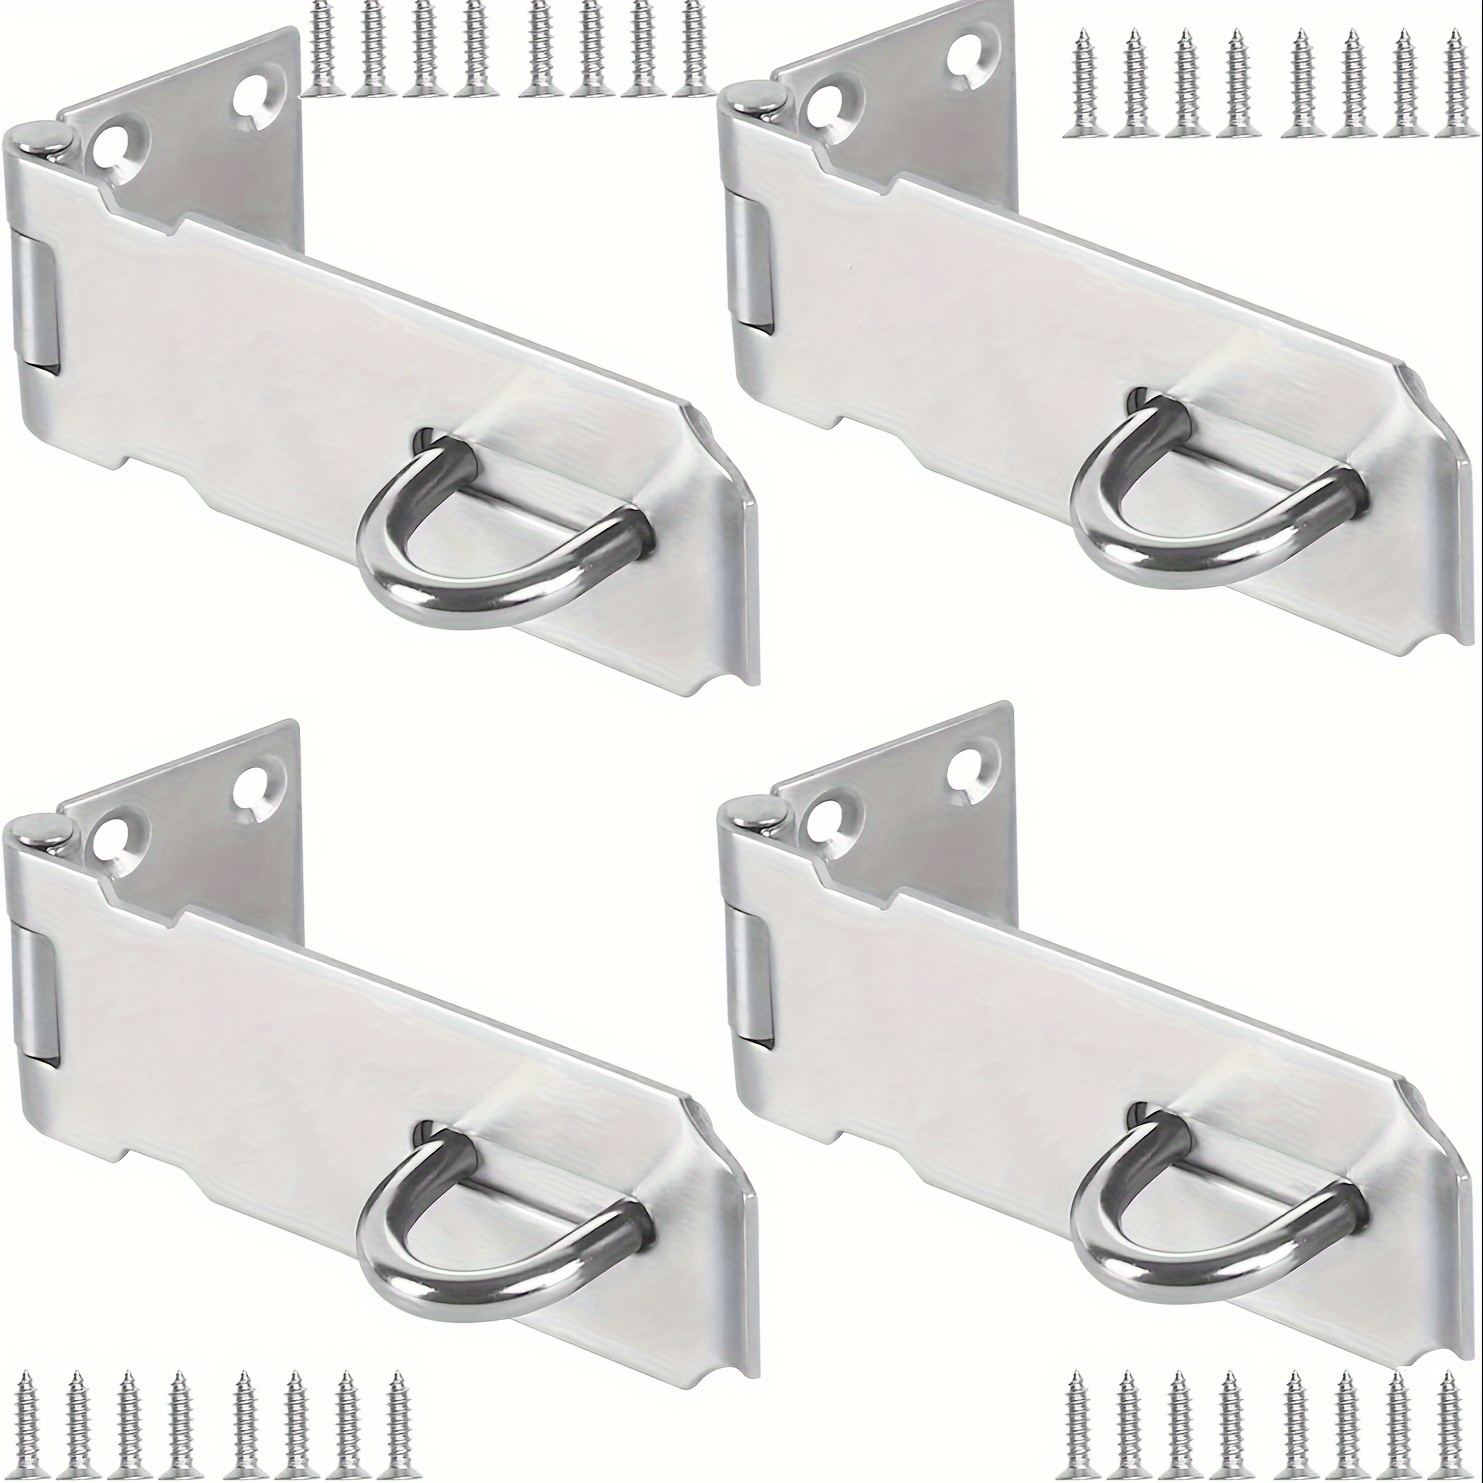 Keyed Hasp Cabinet Door Latch Lock, 2 Pack 2.5 Inch Twist Knob Key Locking  Hasp, Keyed Different Metal Closet Door Locks, Desk Locks for Drawers with